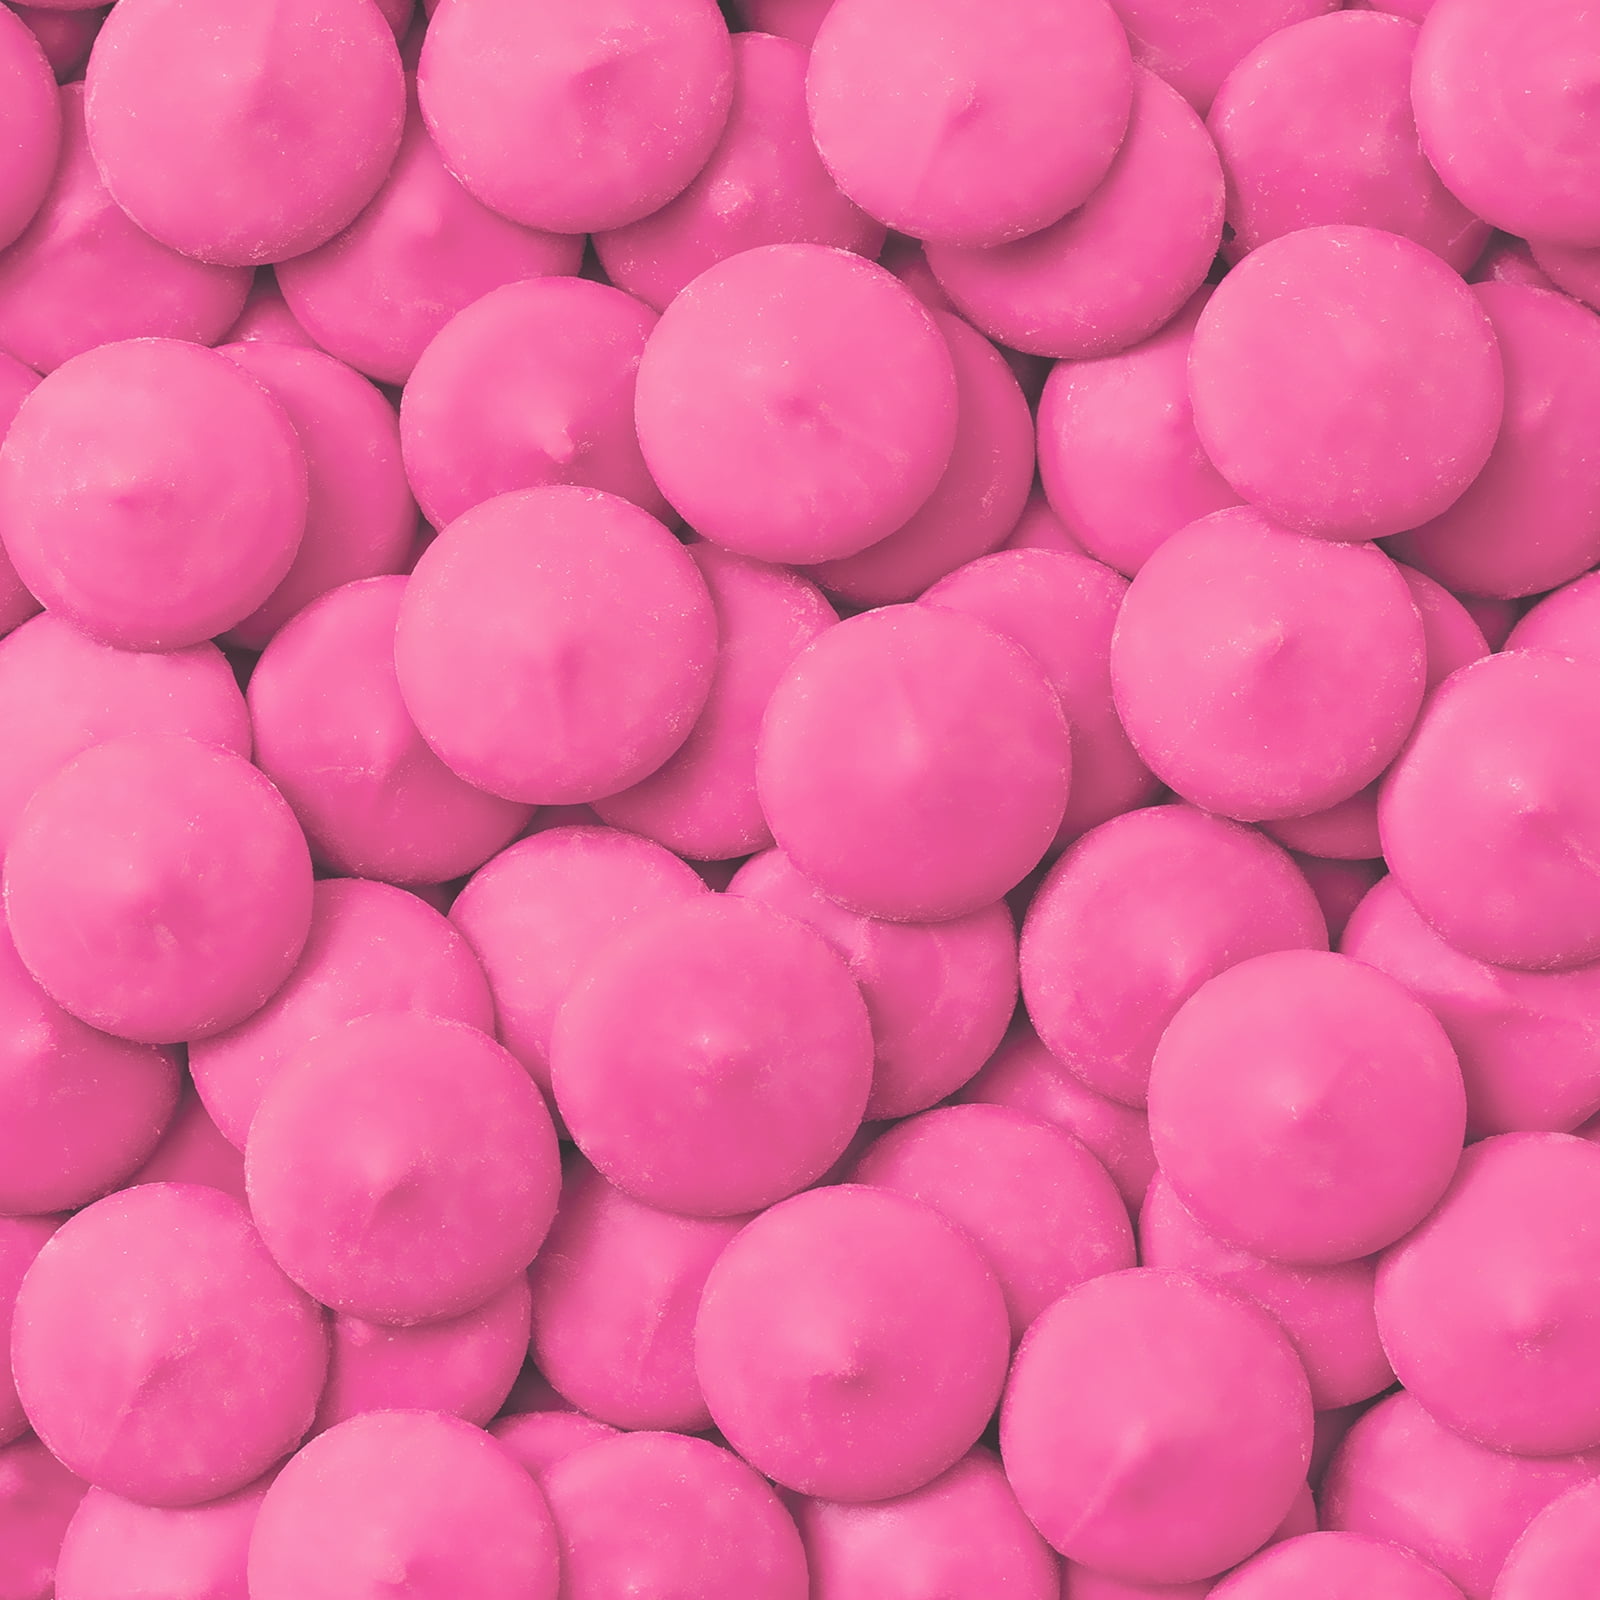 Sweetshop Melt'ems Bright Pink Candy Melts - 12 oz